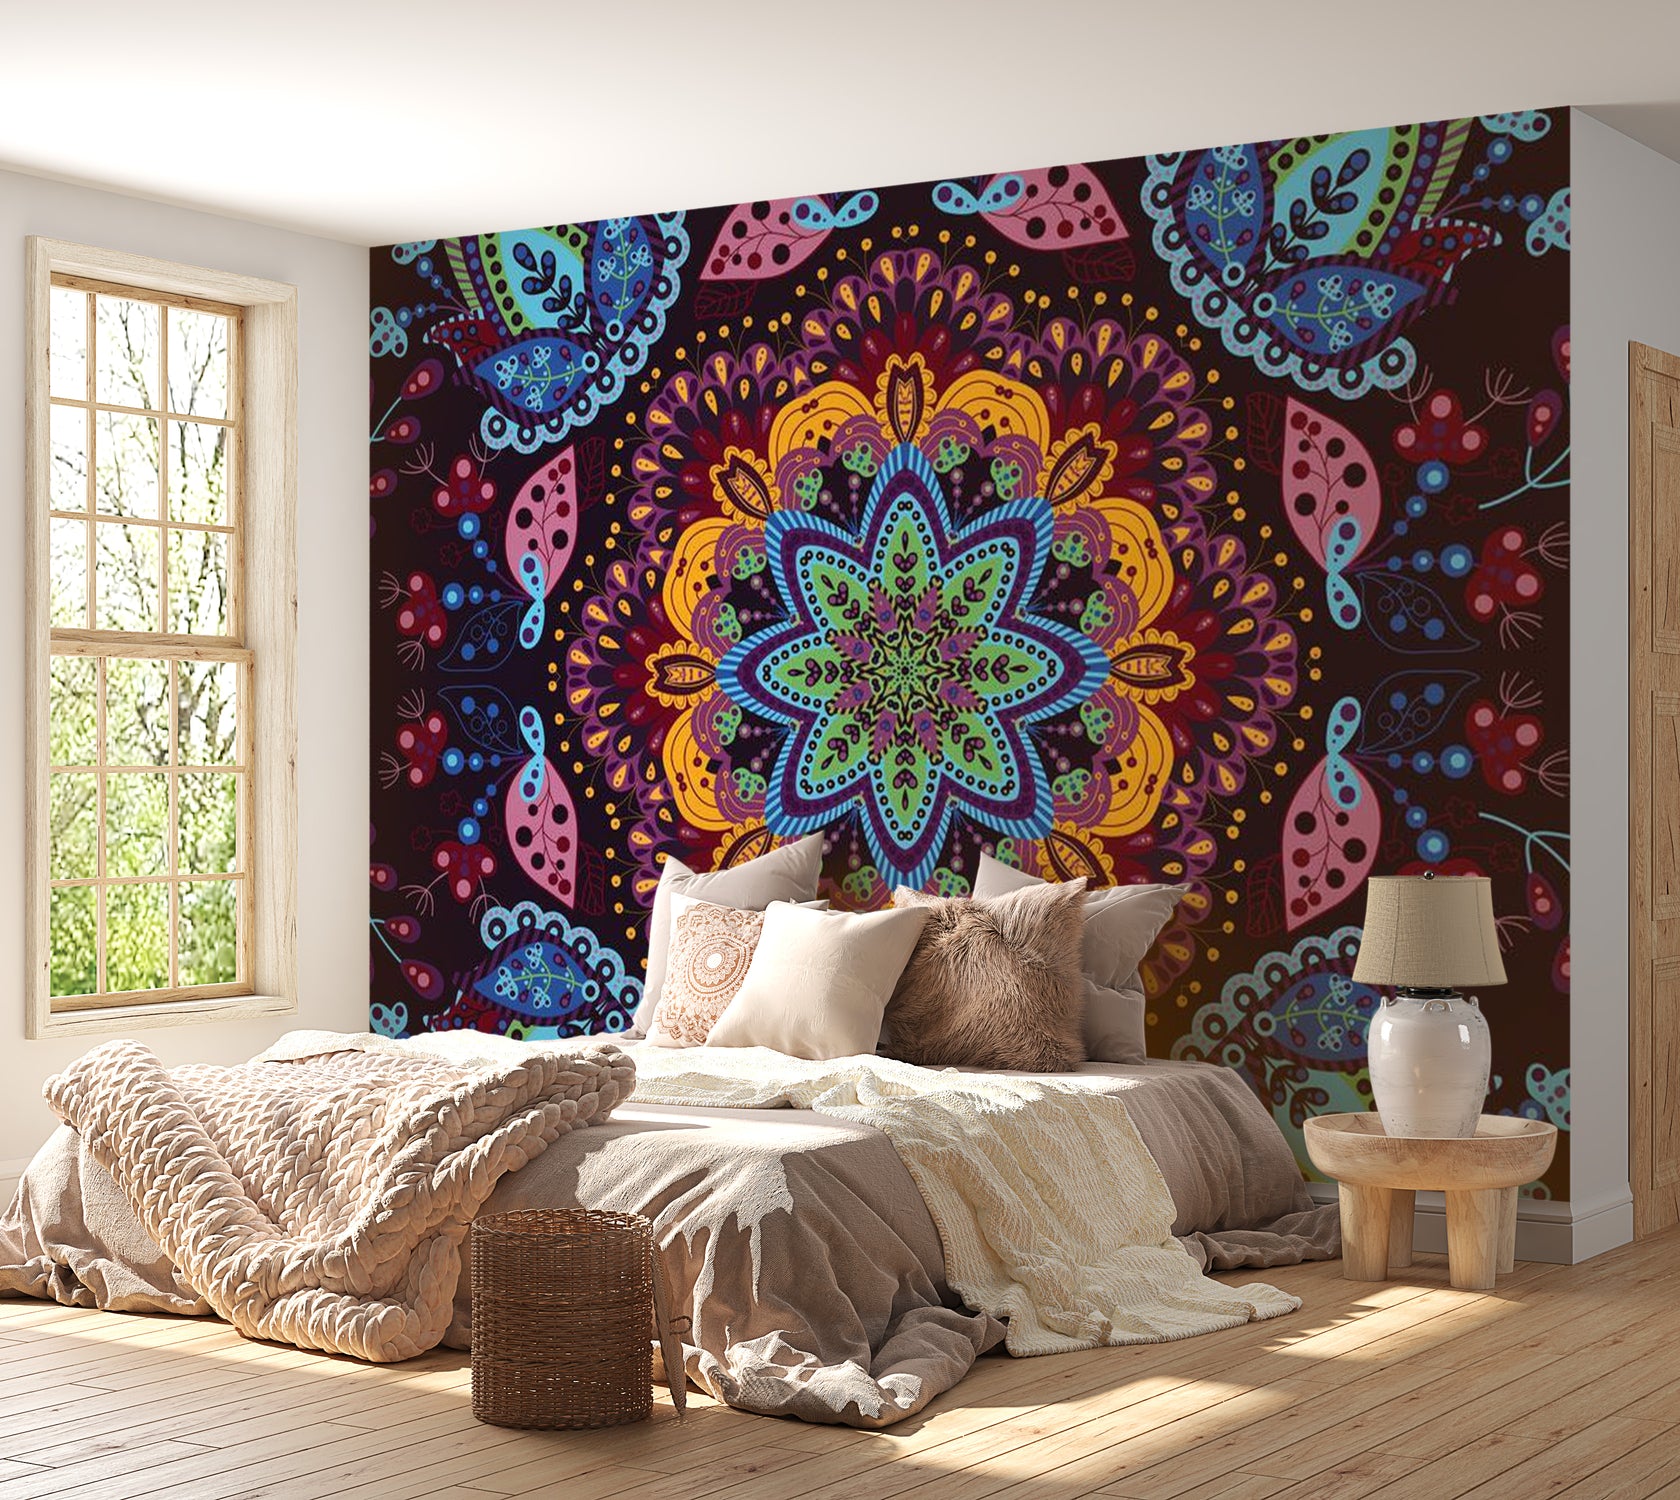 Mandala Wallpaper Wall Mural - Colorful Kaleidoscope